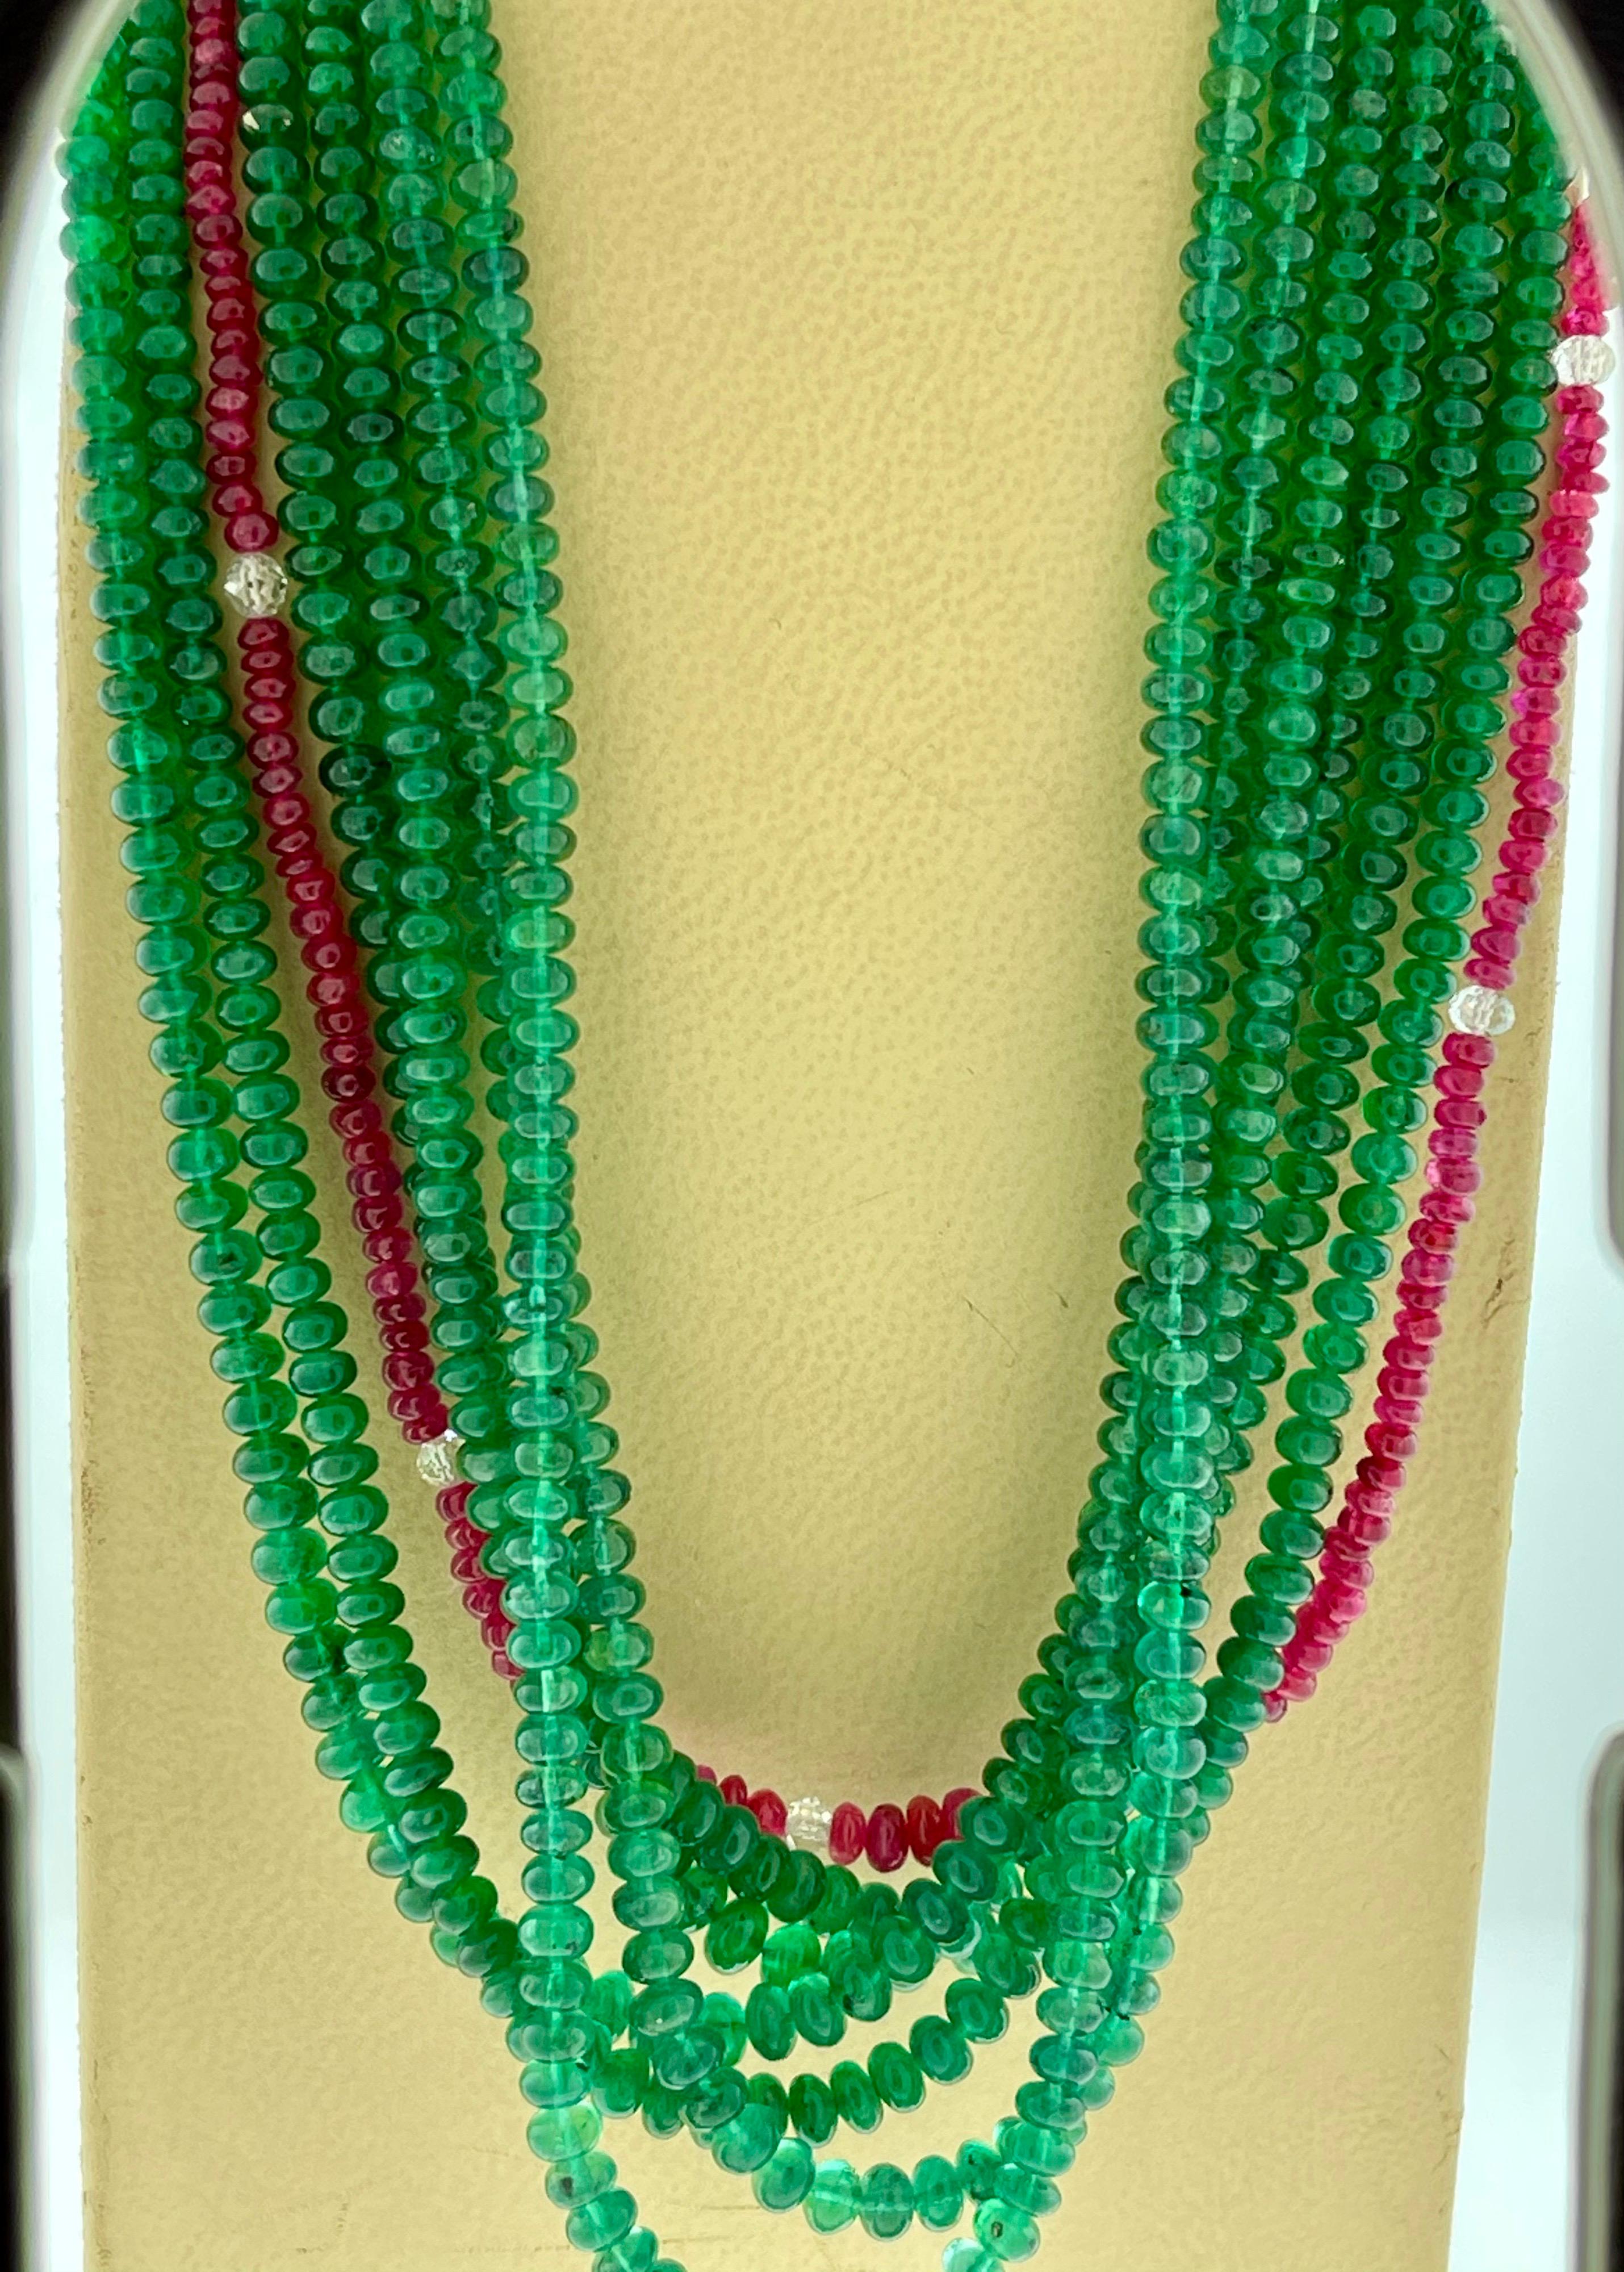 360 Carat Emerald, Burma Ruby and Diamond Beads Necklace 18 Karat Yellow Gold For Sale 3